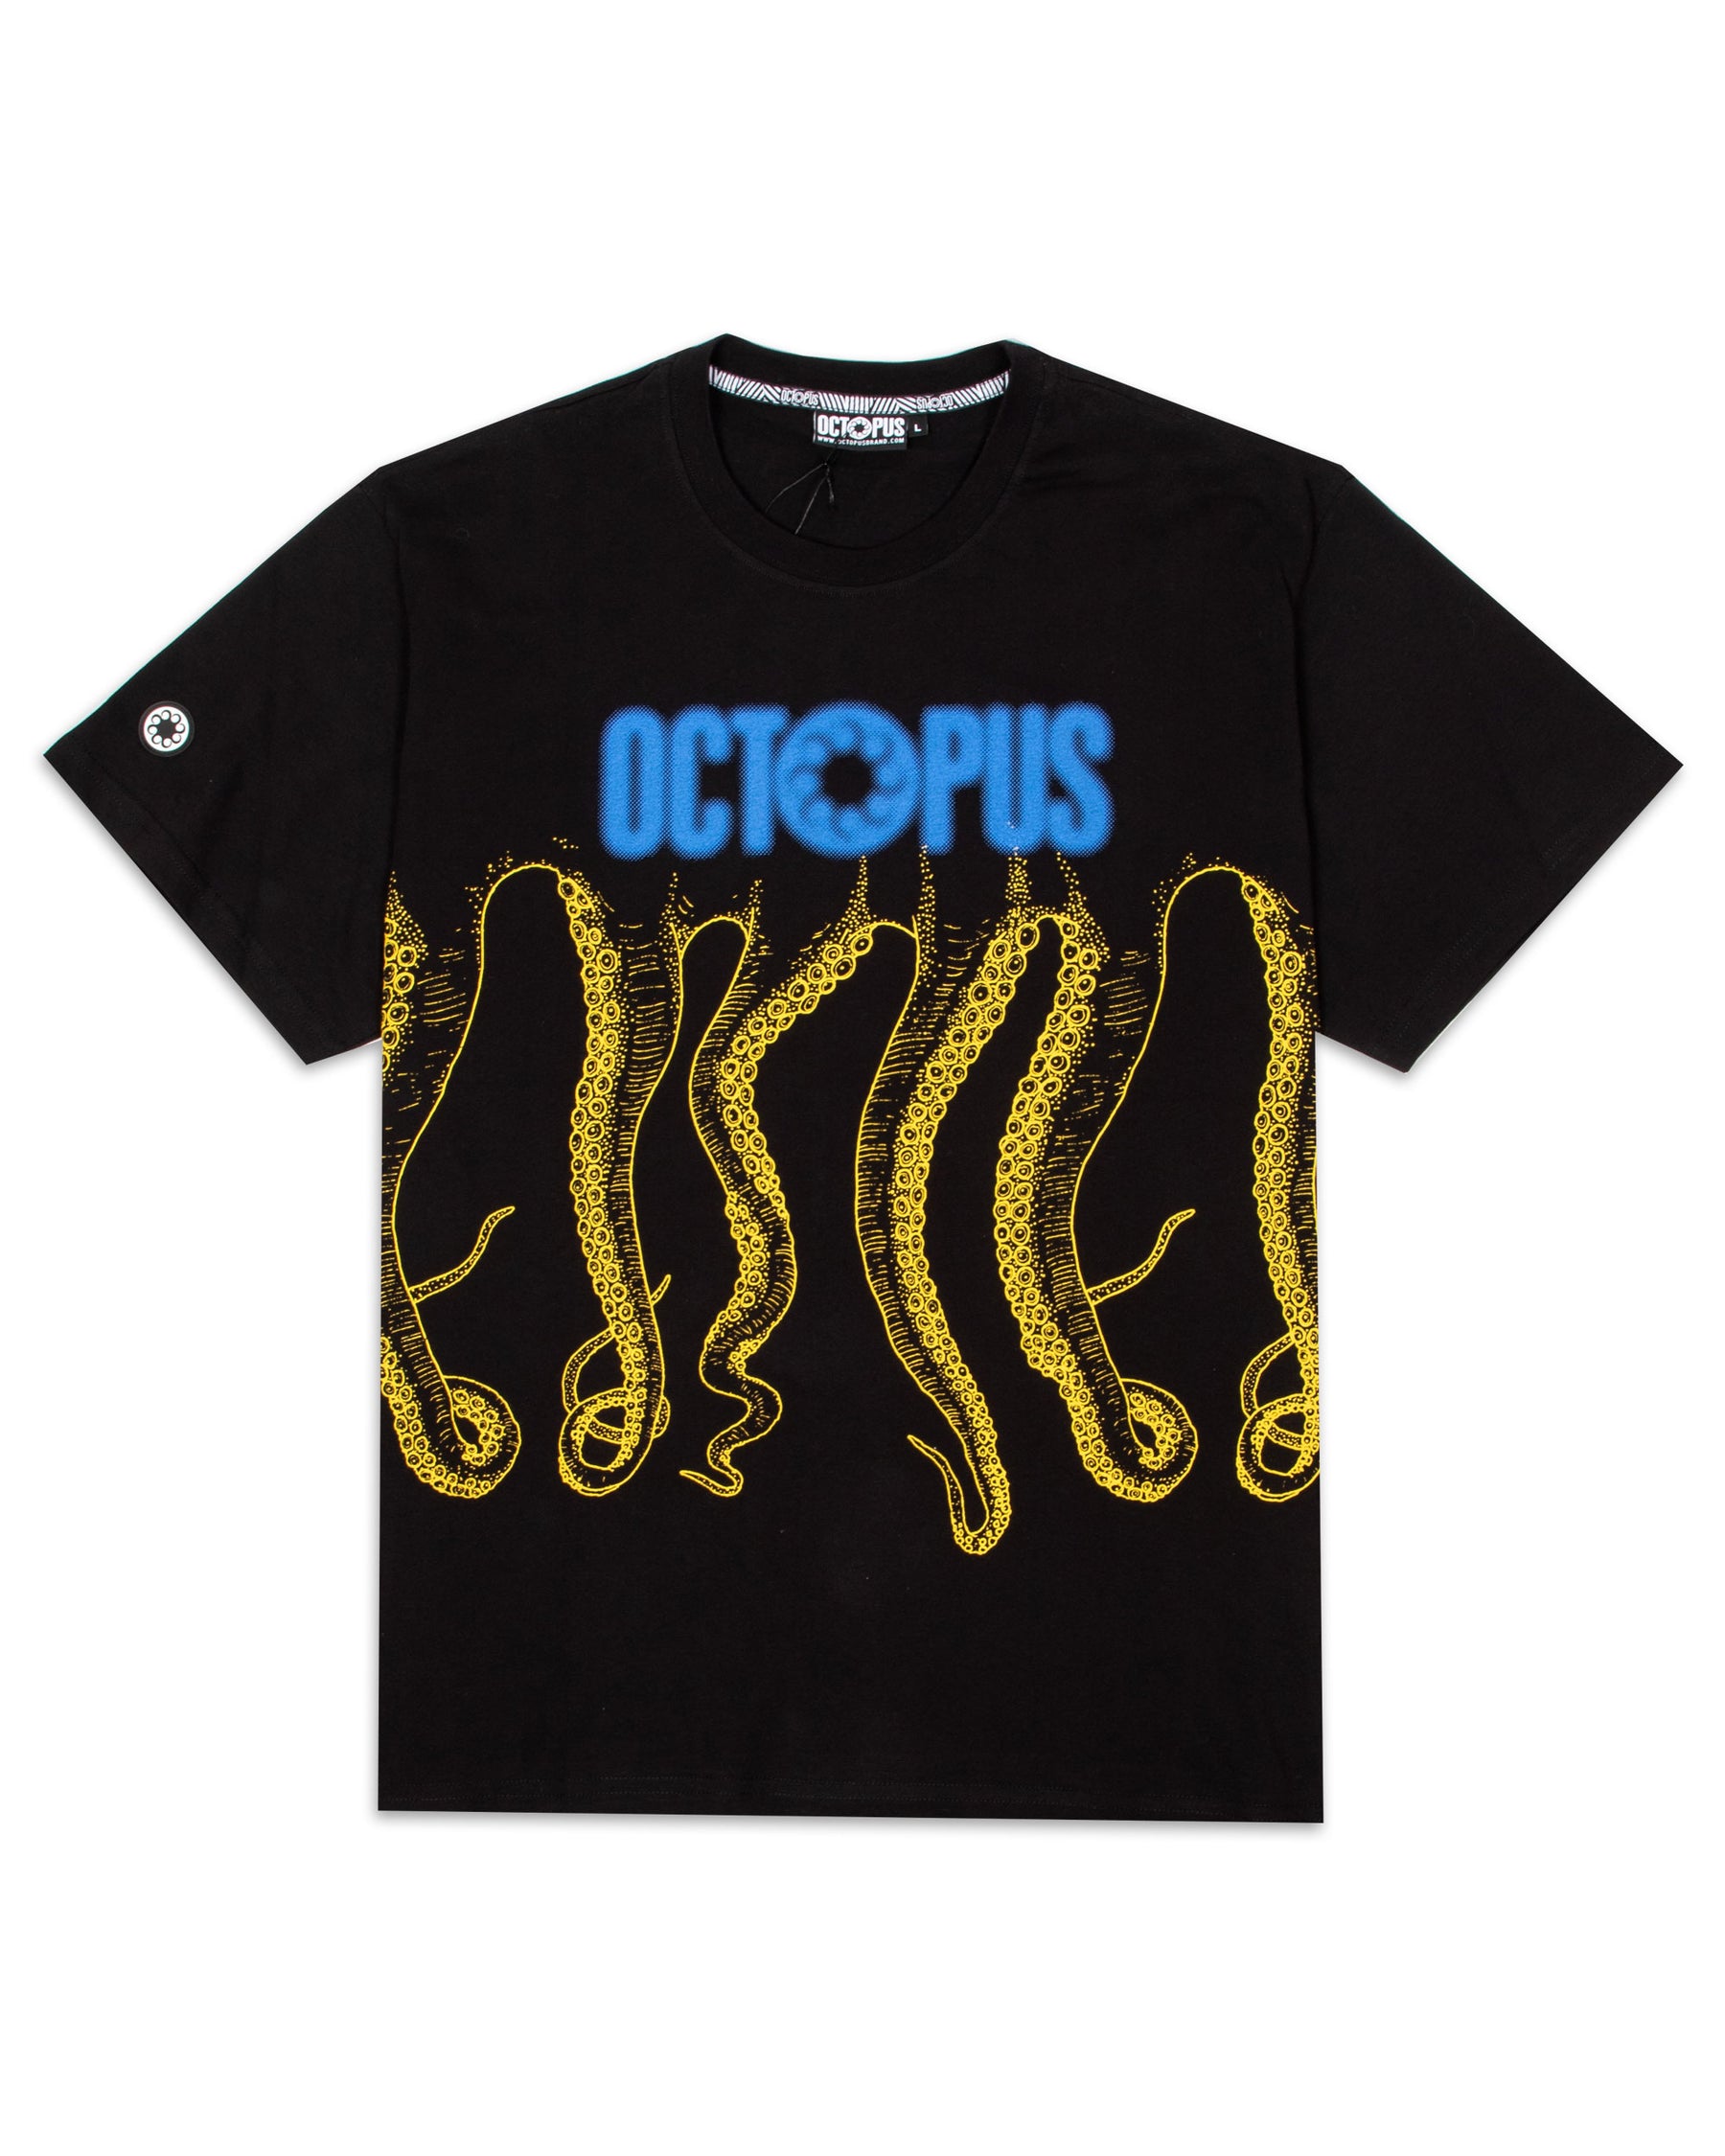 T-Shirt Octopus Blurred 21WOTS11-Nero